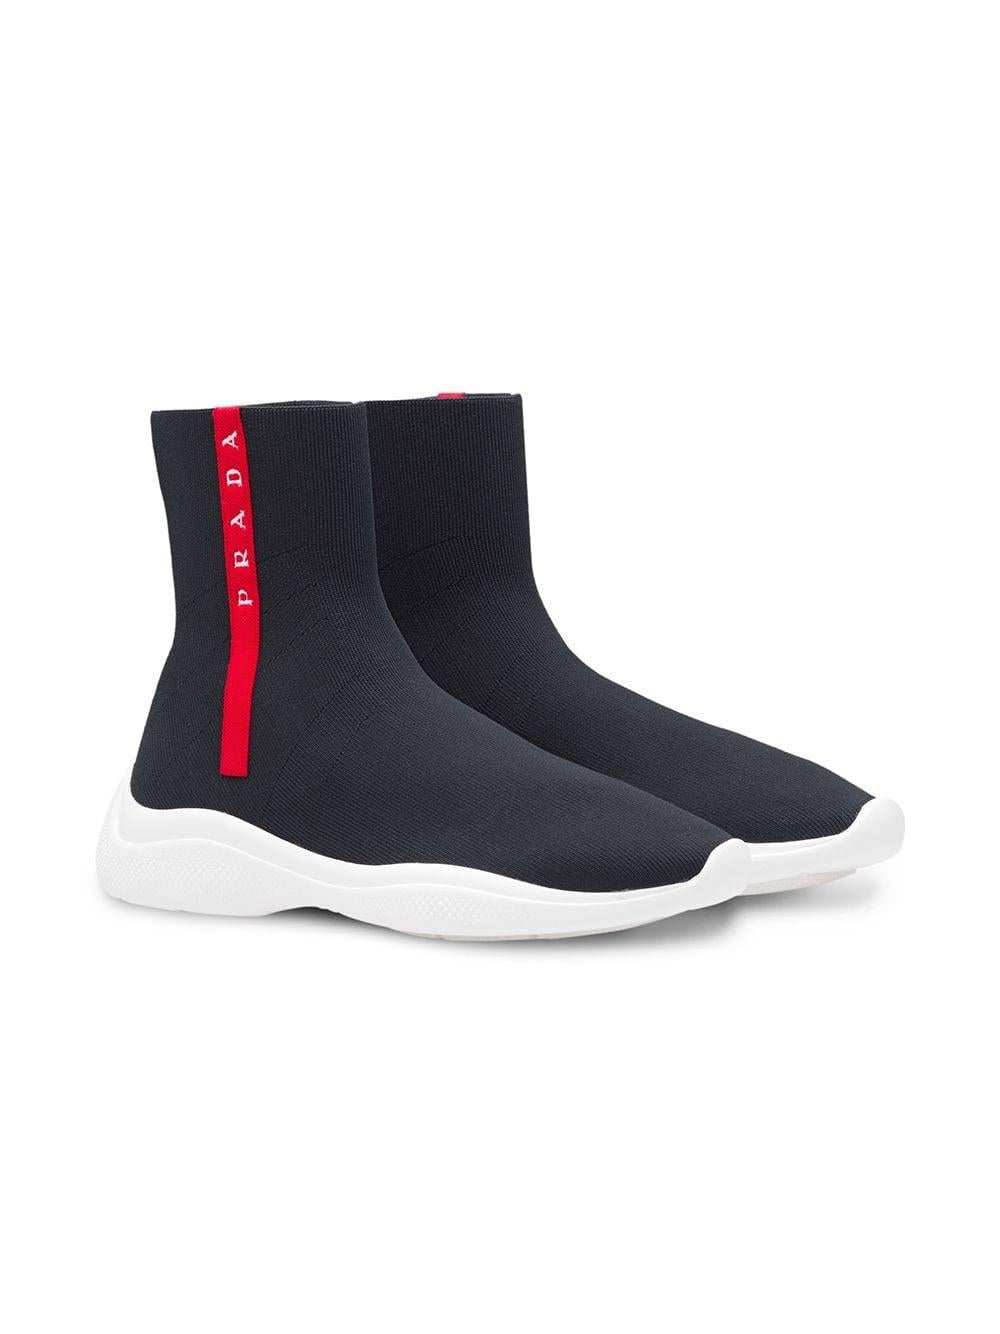 Prada Logo Band Sock Sneaker hi-Top Sock Sneakers Size 6.5, Pre Loved ...